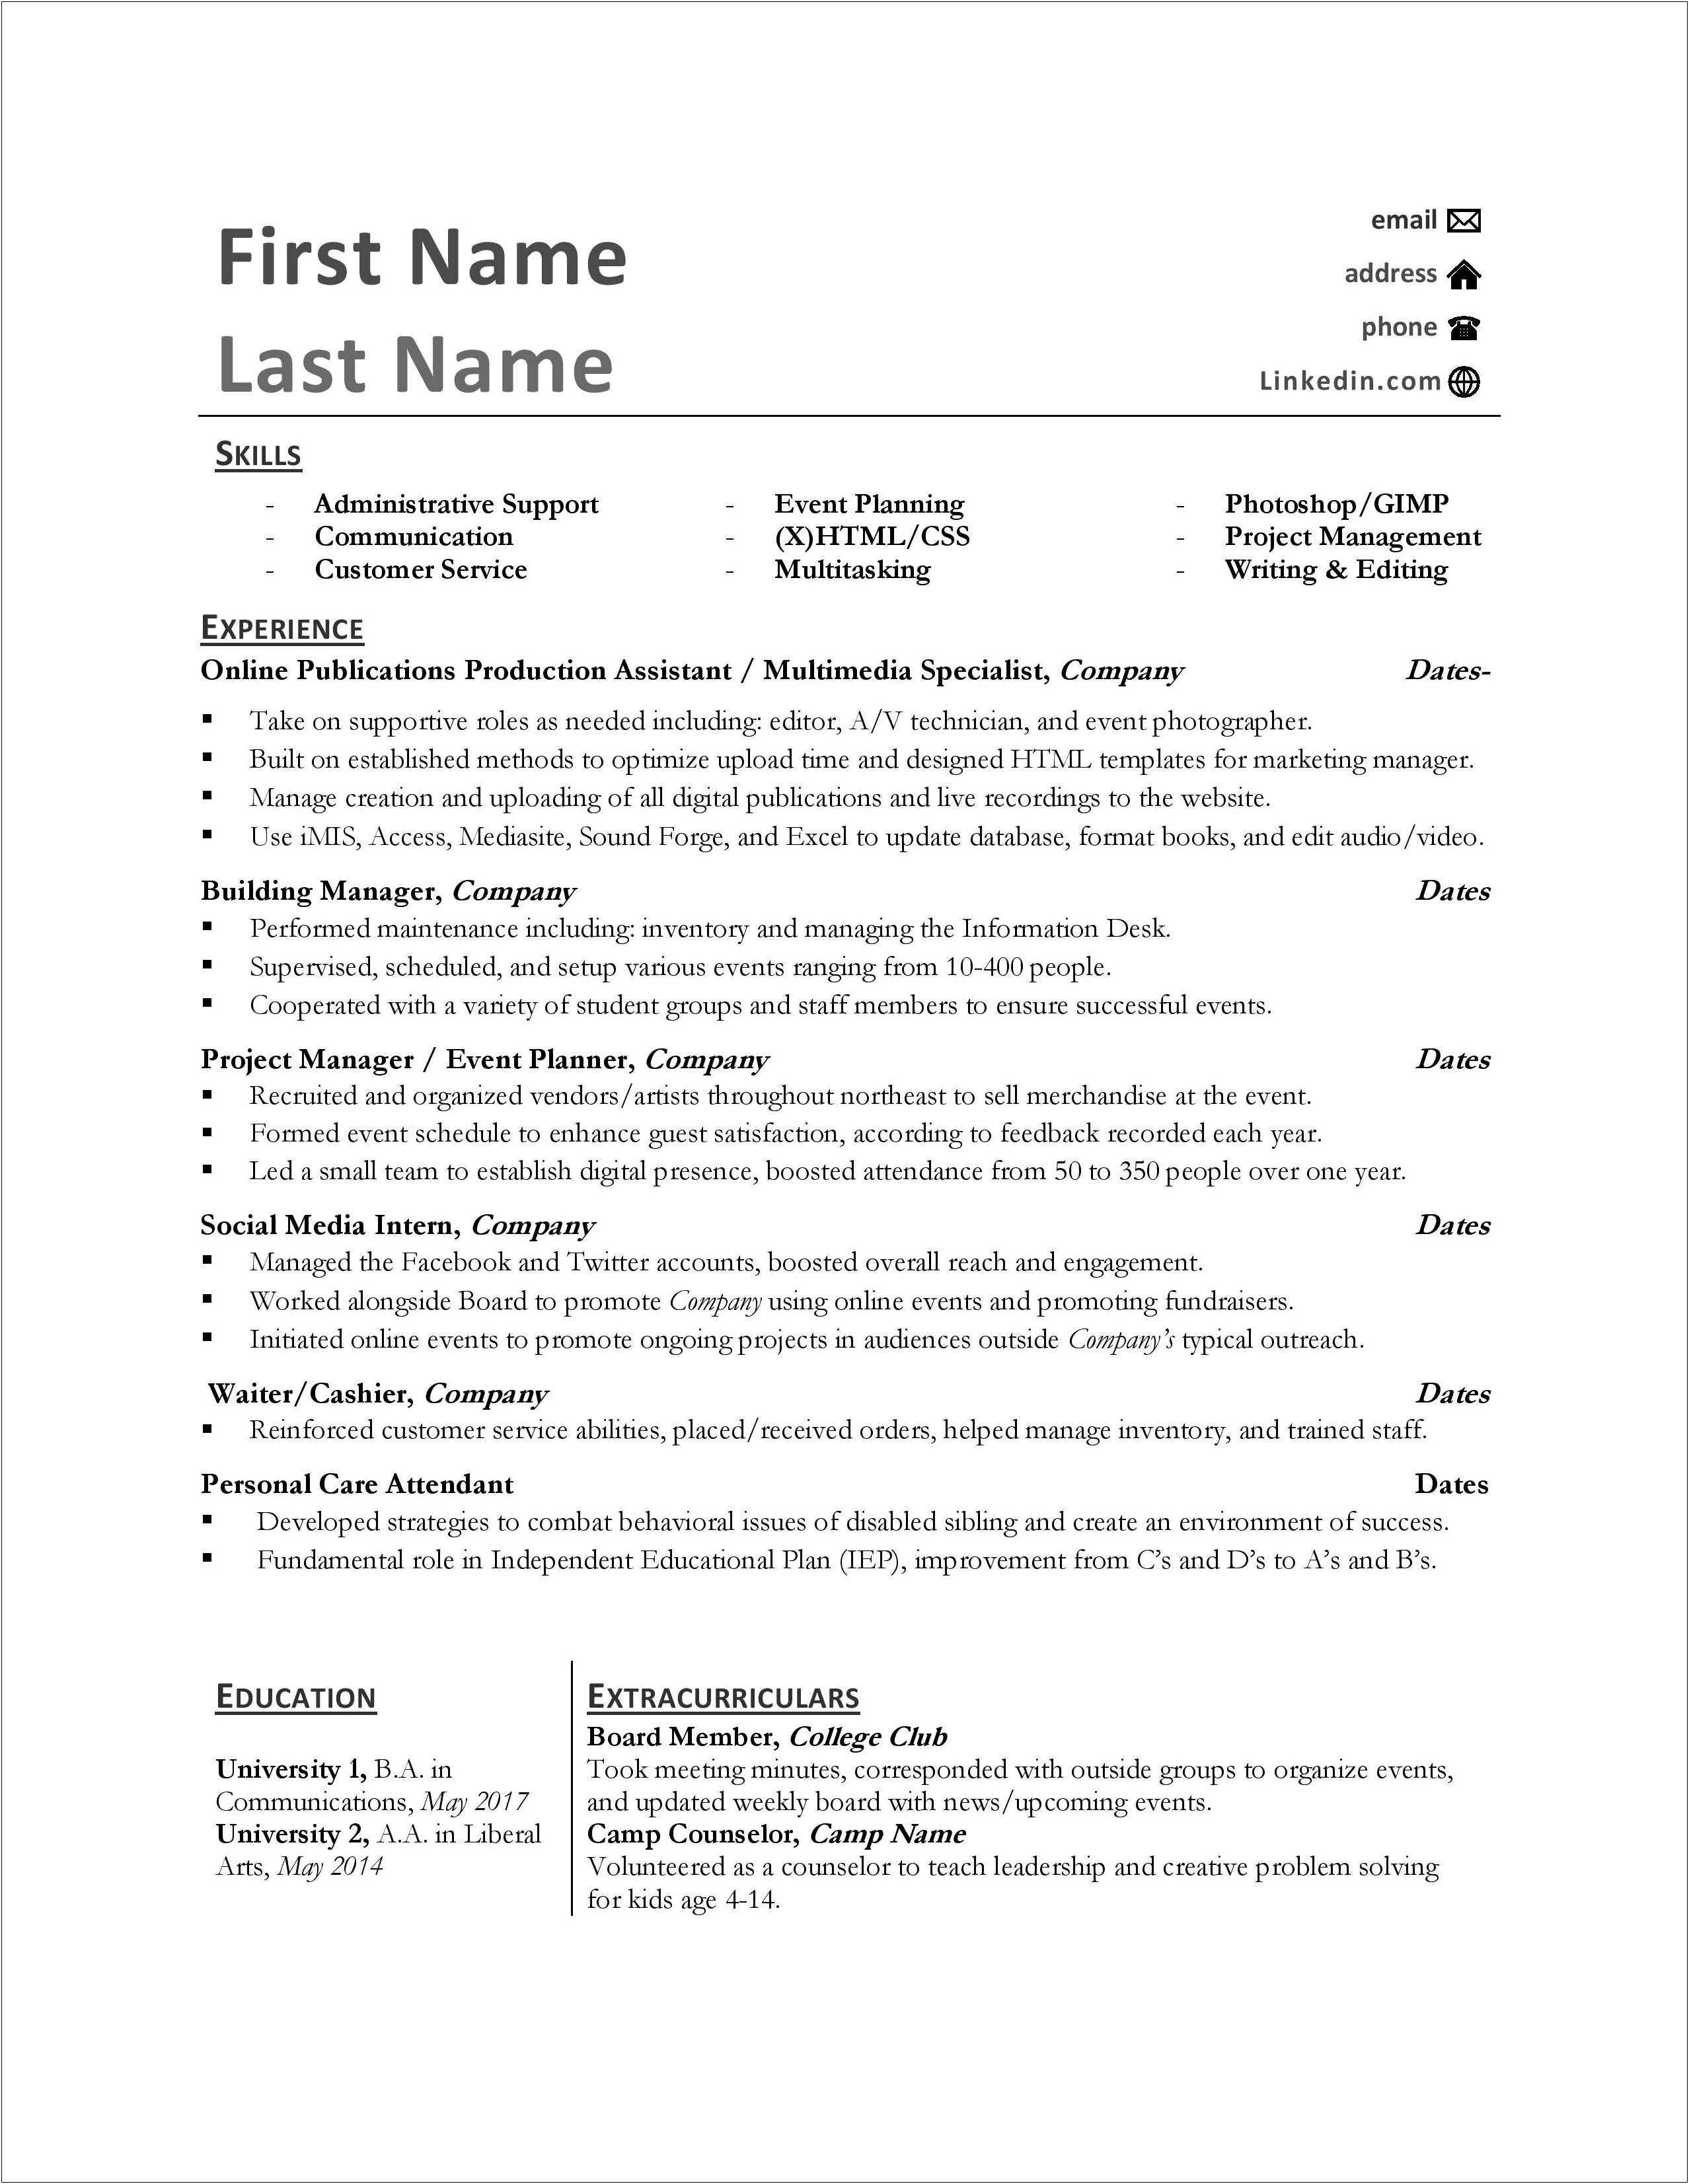 Resume Summary Years Experience Multiple Jobs